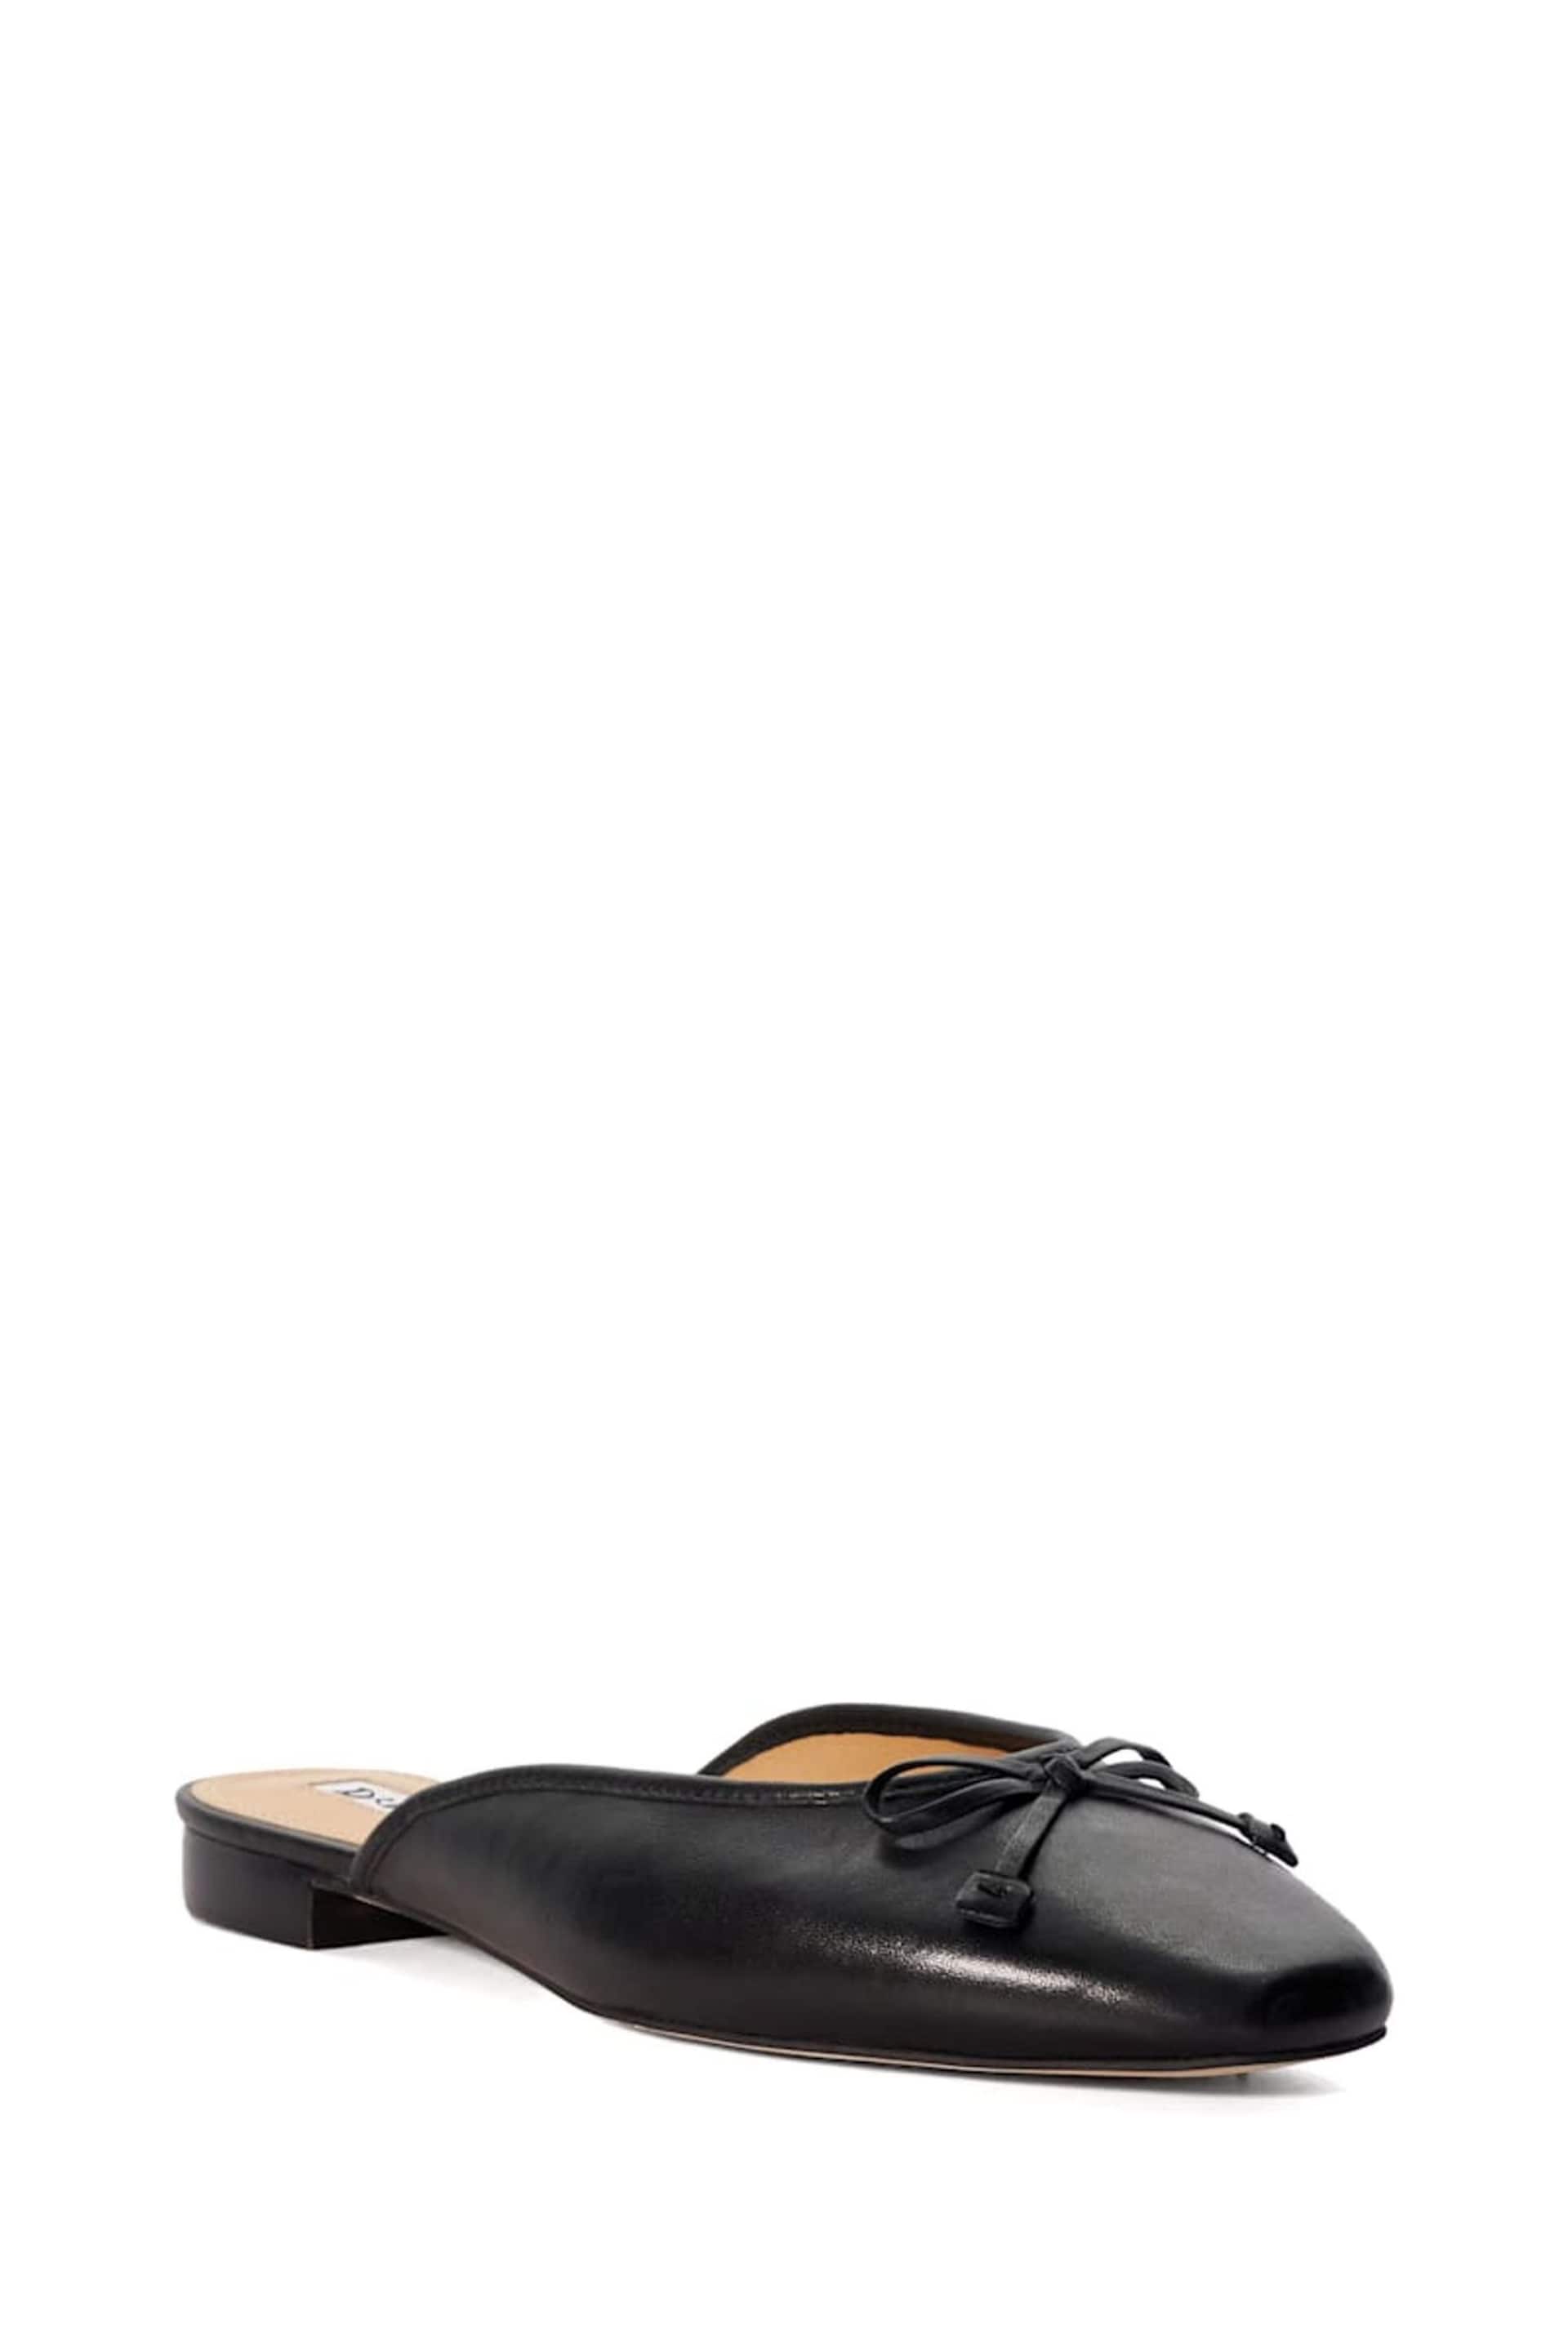 Dune London Black Haylas Ballerina Shoes - Image 4 of 6